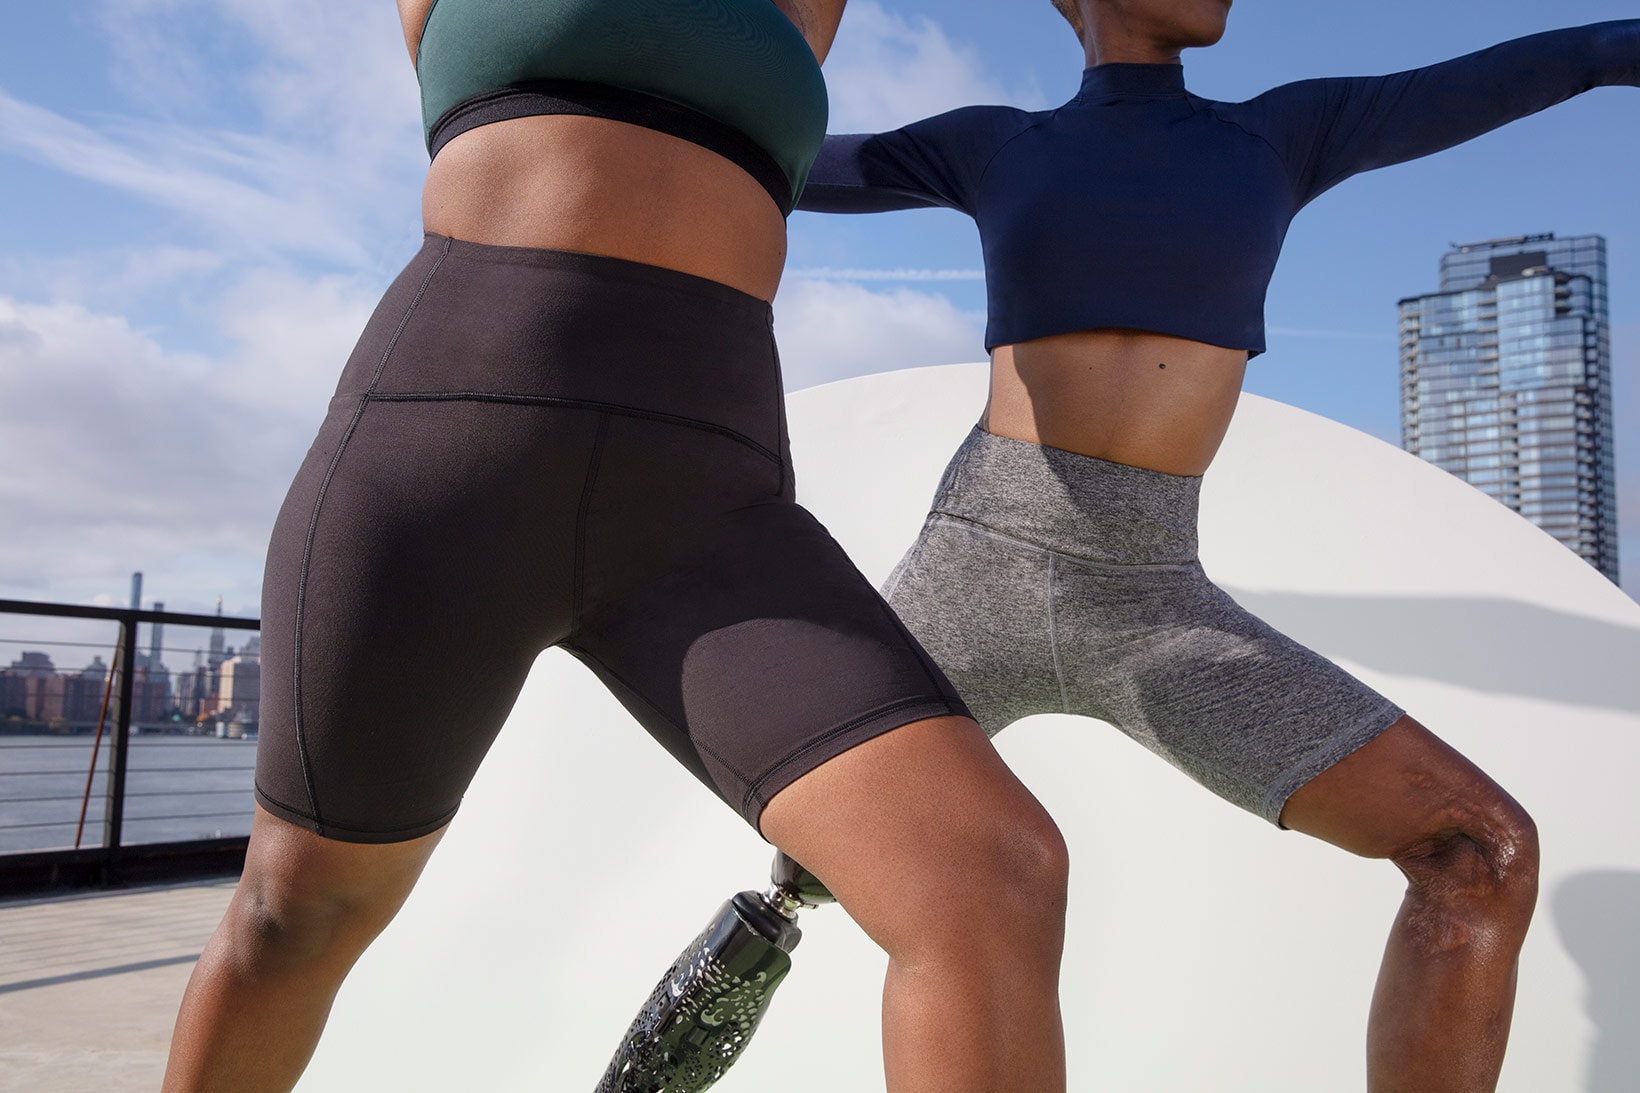 thinx activewear period absorbing bike training shorts black olive green long sleeve top tank socks city skyline stretch